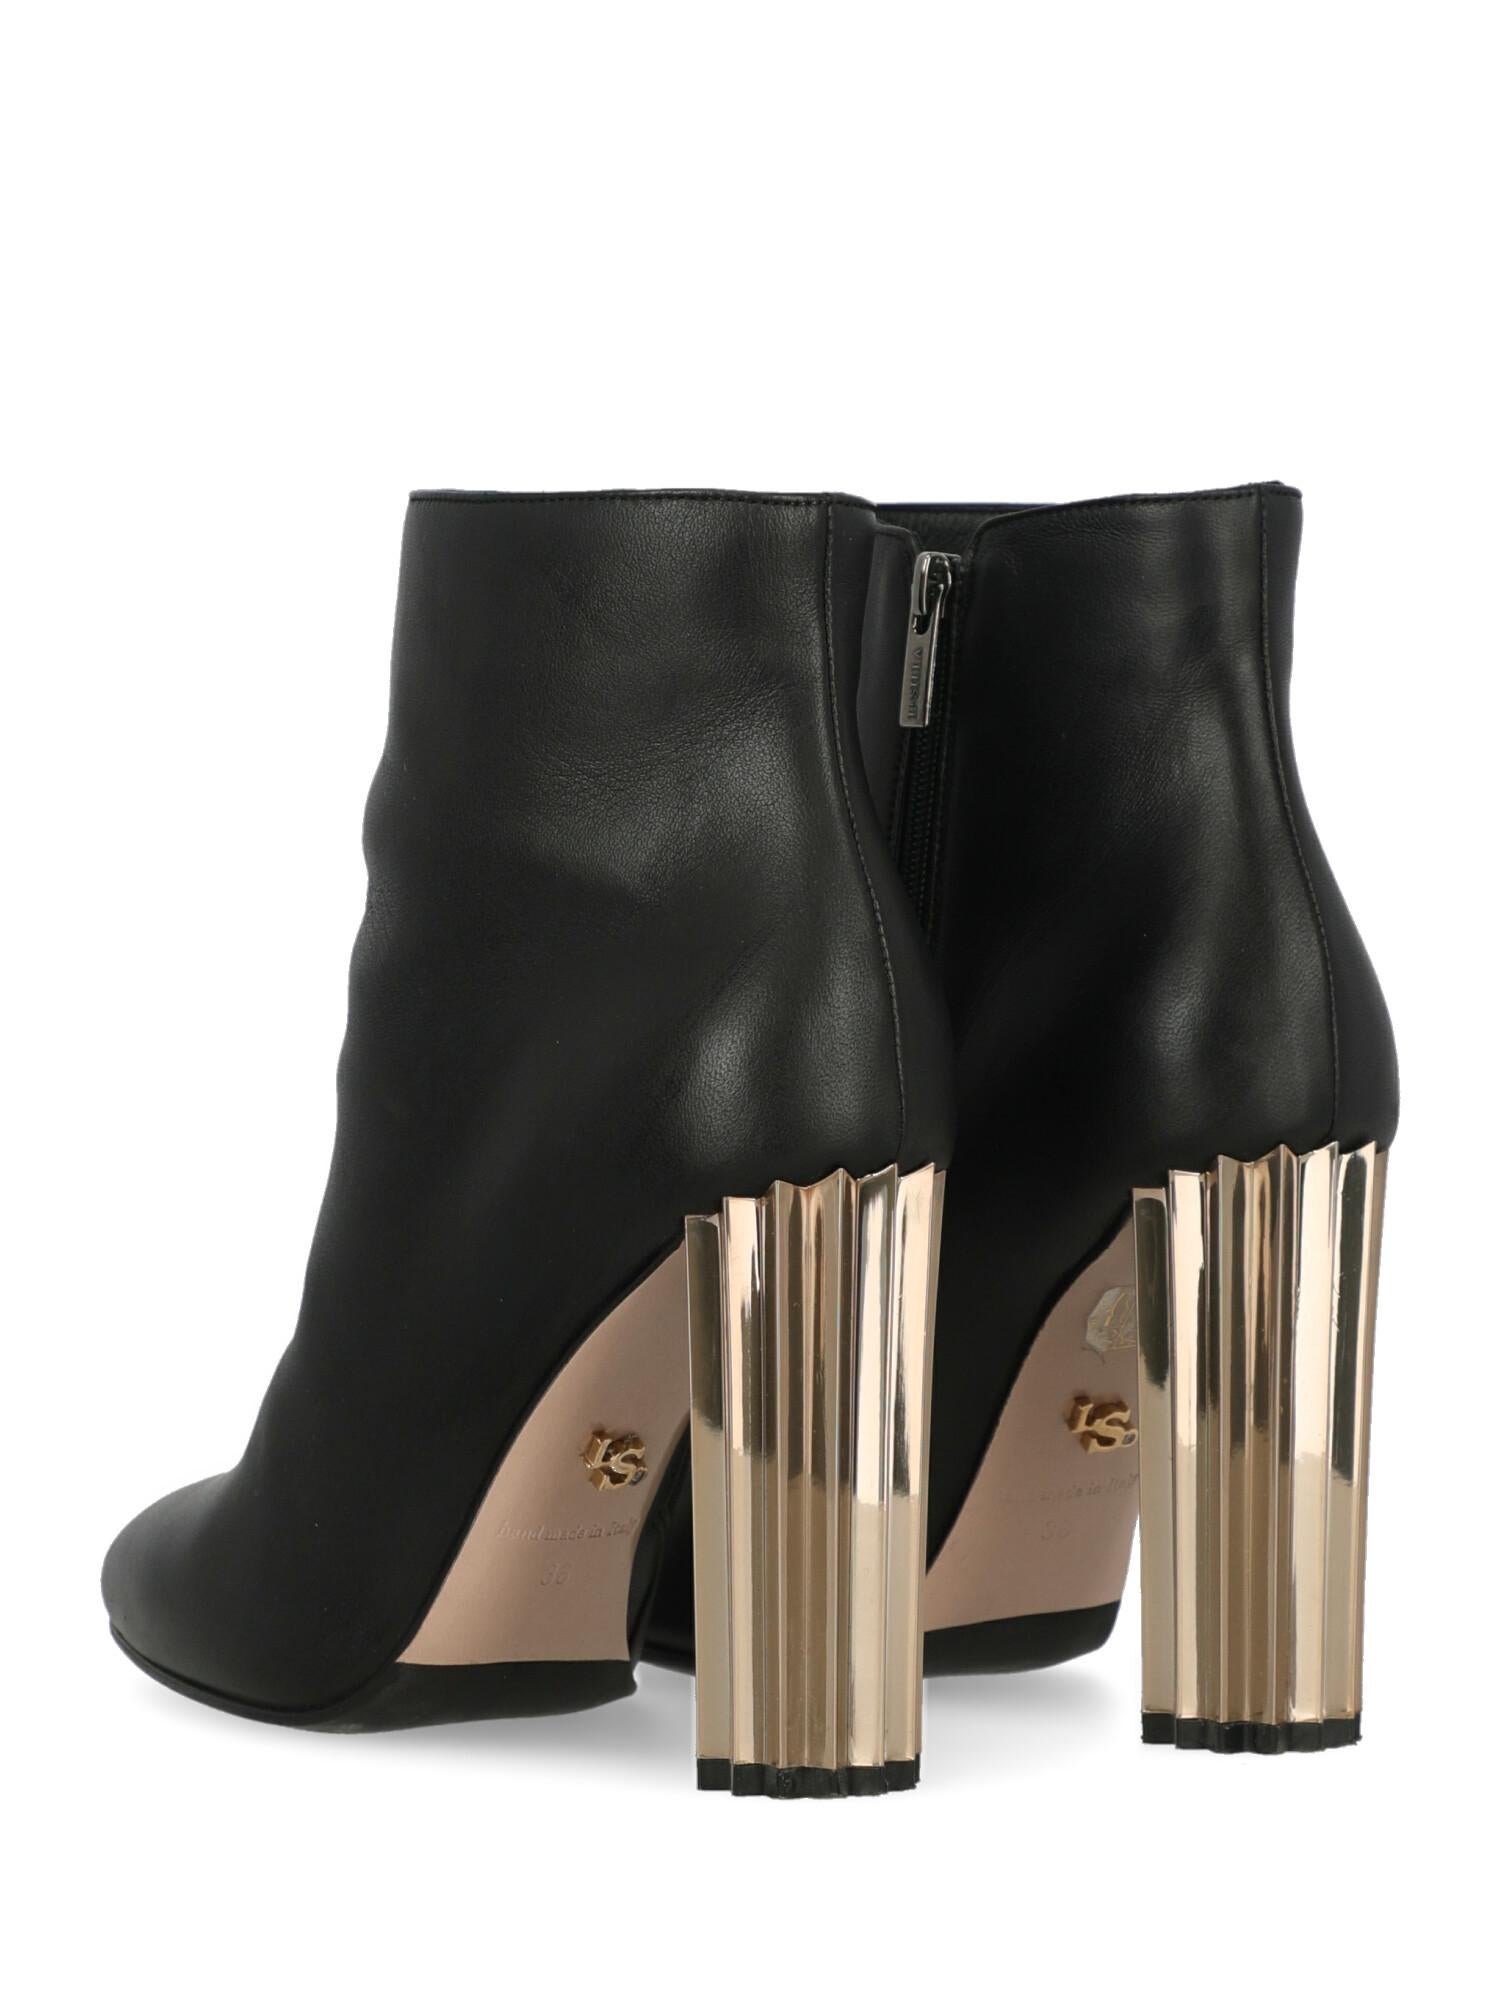 Women's Le Silla Woman Ankle boots Black Leather IT 38 For Sale